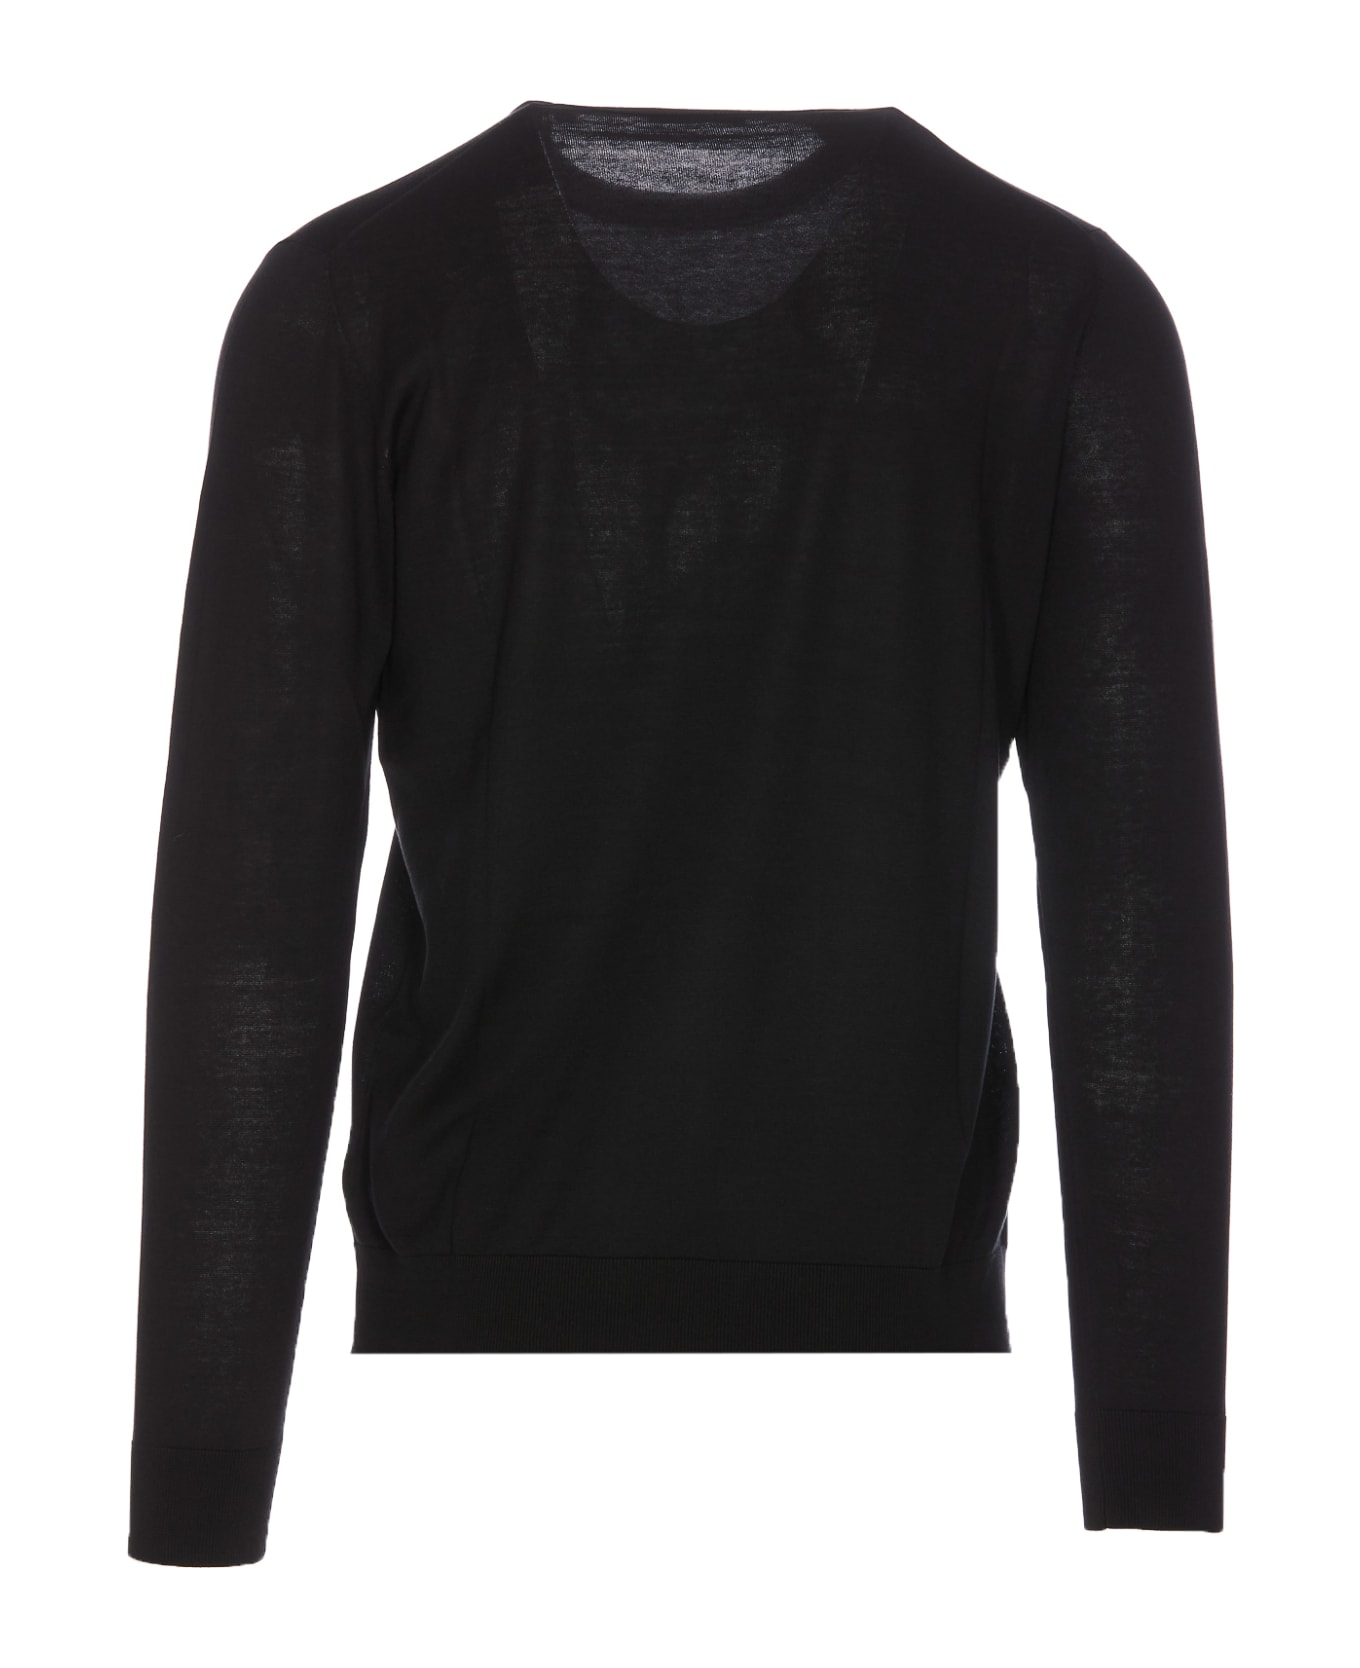 Paolo Pecora Sweater - Black ニットウェア